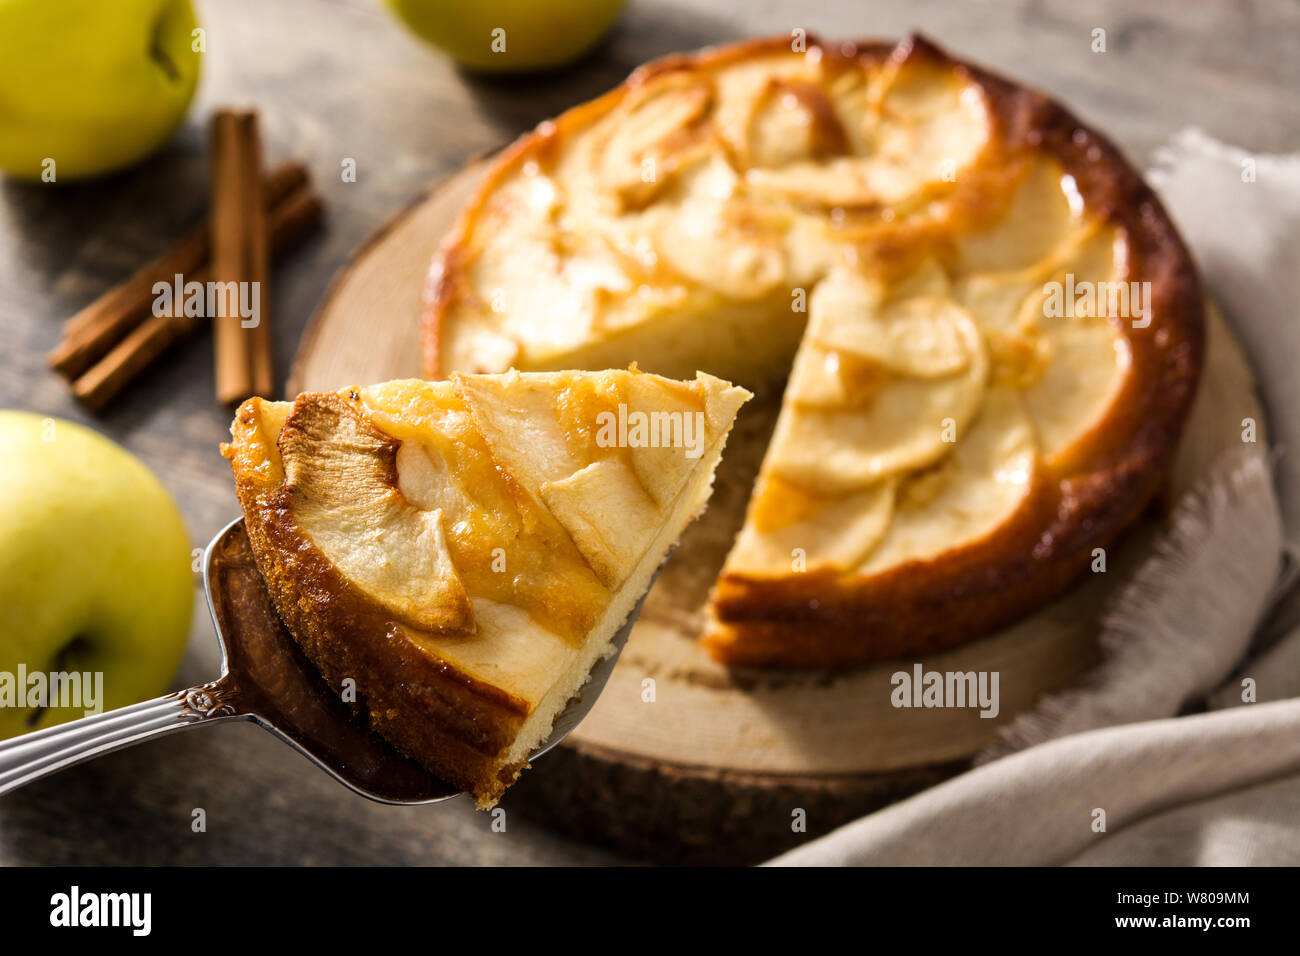 Homemade slice apple pie on wooden table. Stock Photo